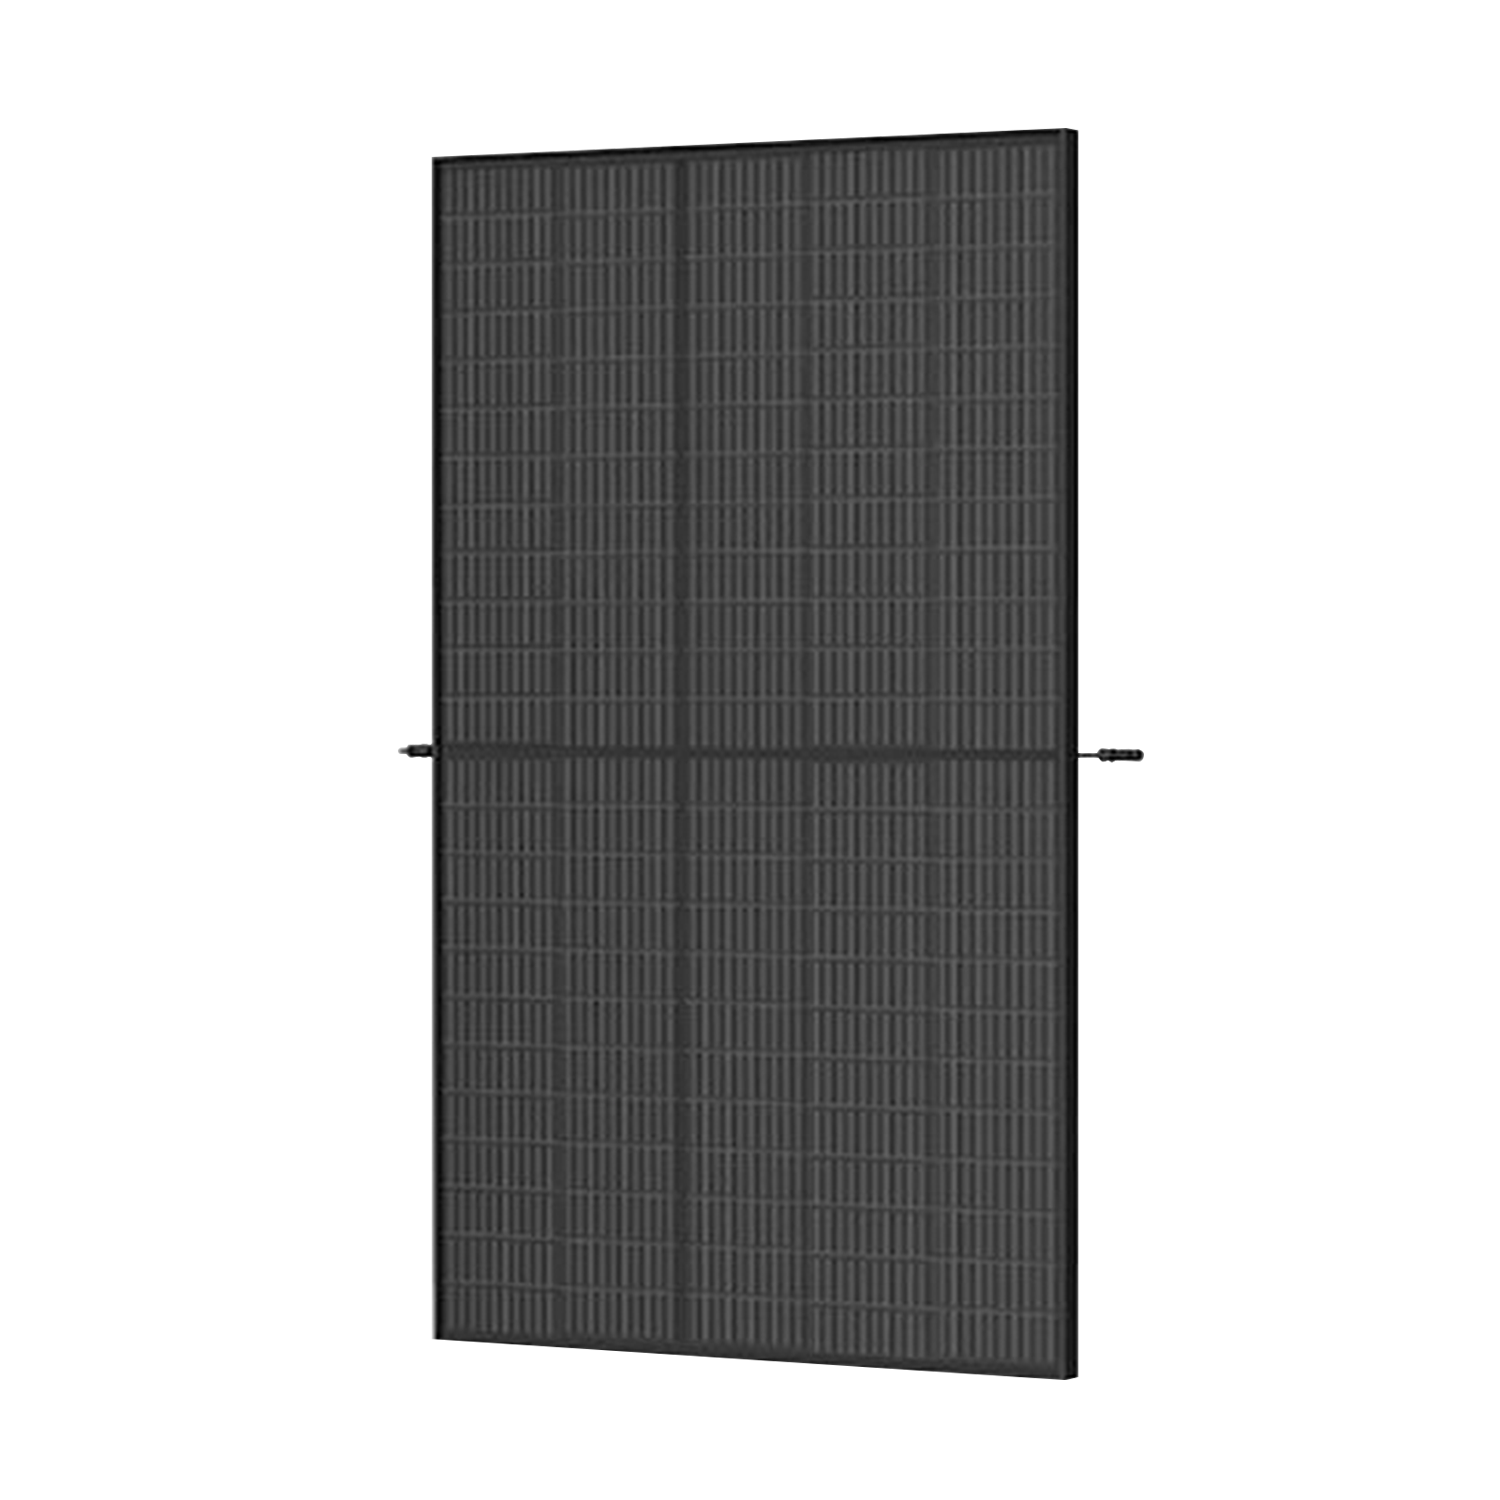 Trina Solar bifaziales Vertex S+ 